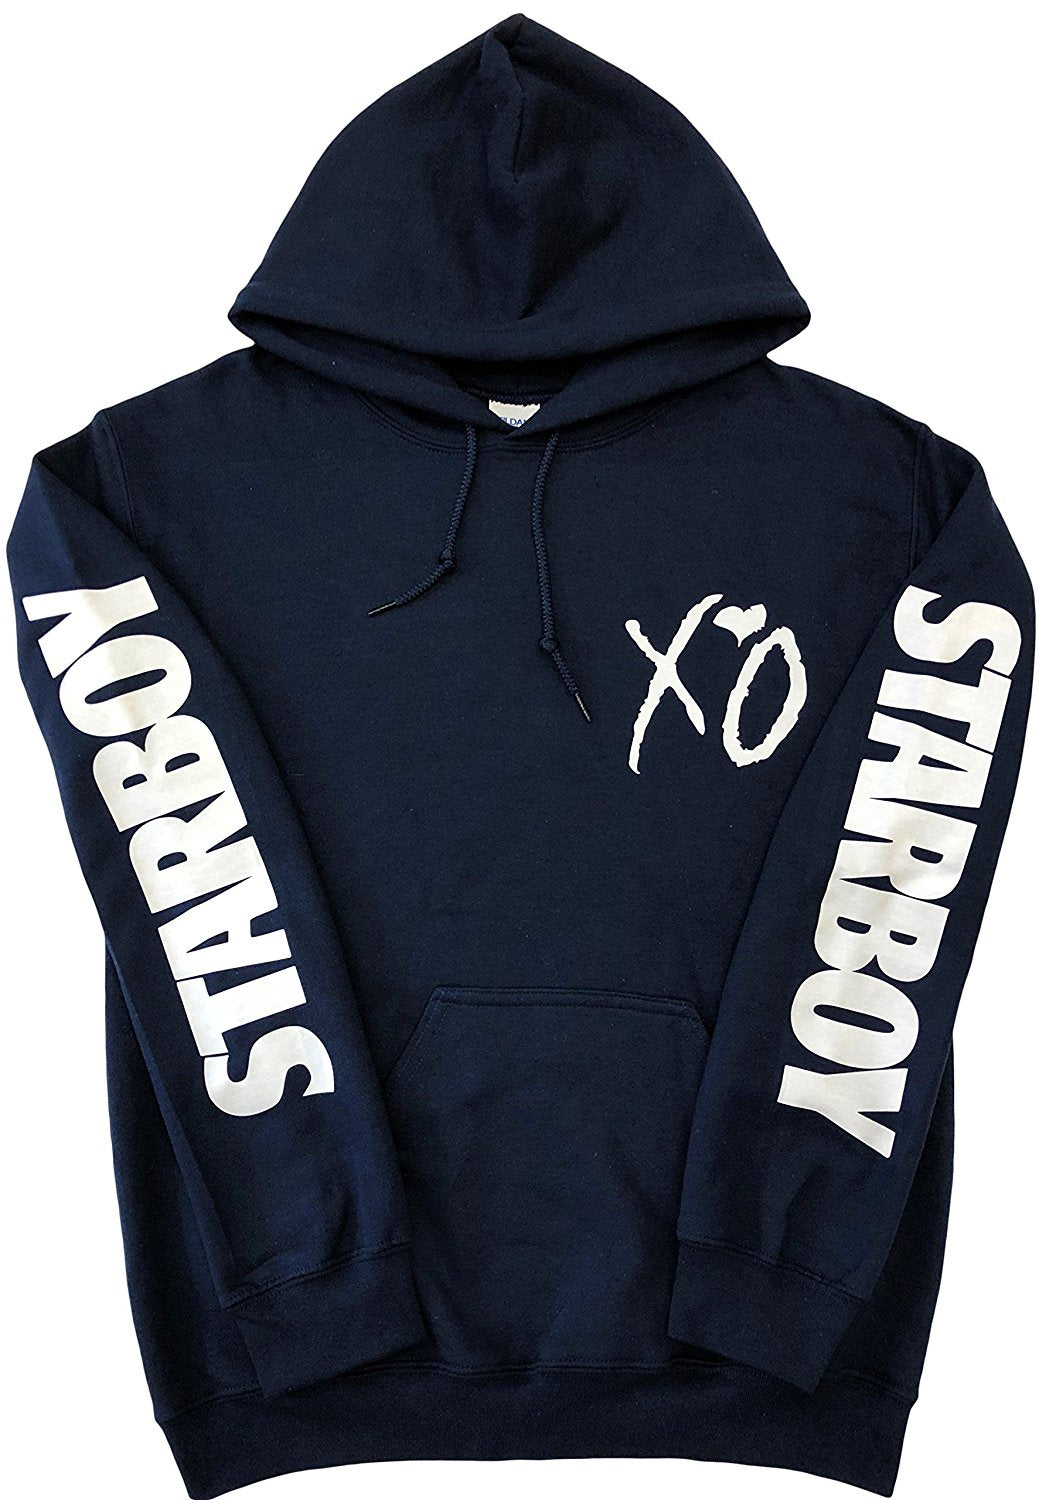 The Weeknd Cross Hoodie, XO The Weeknd Merch, Tour Clothing (Infrared -  Custom City